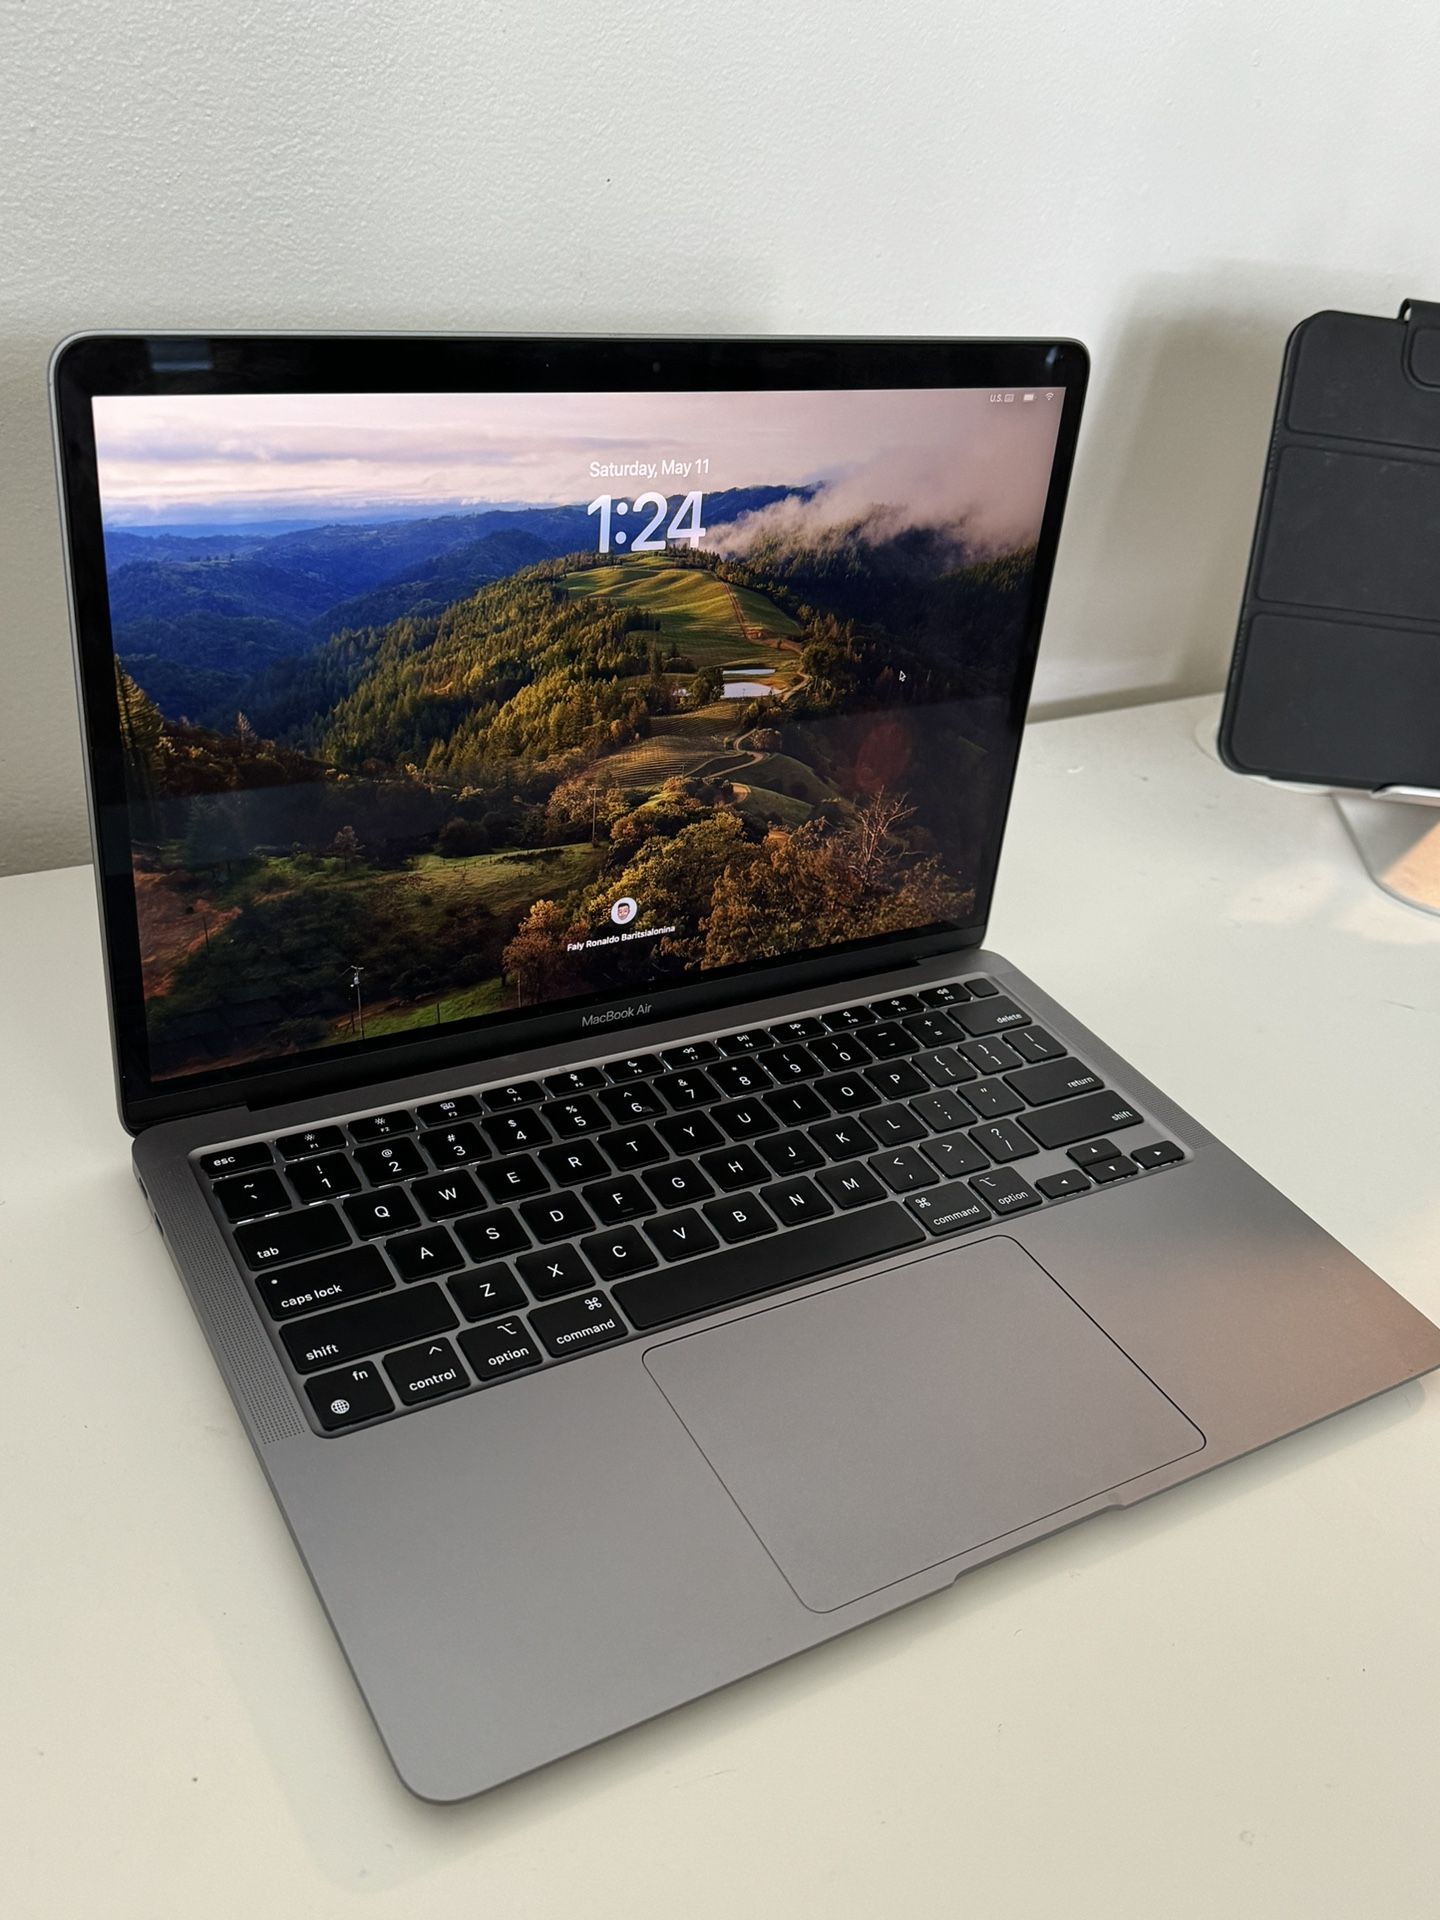 MacBook Air M1 2020 | 256 GB